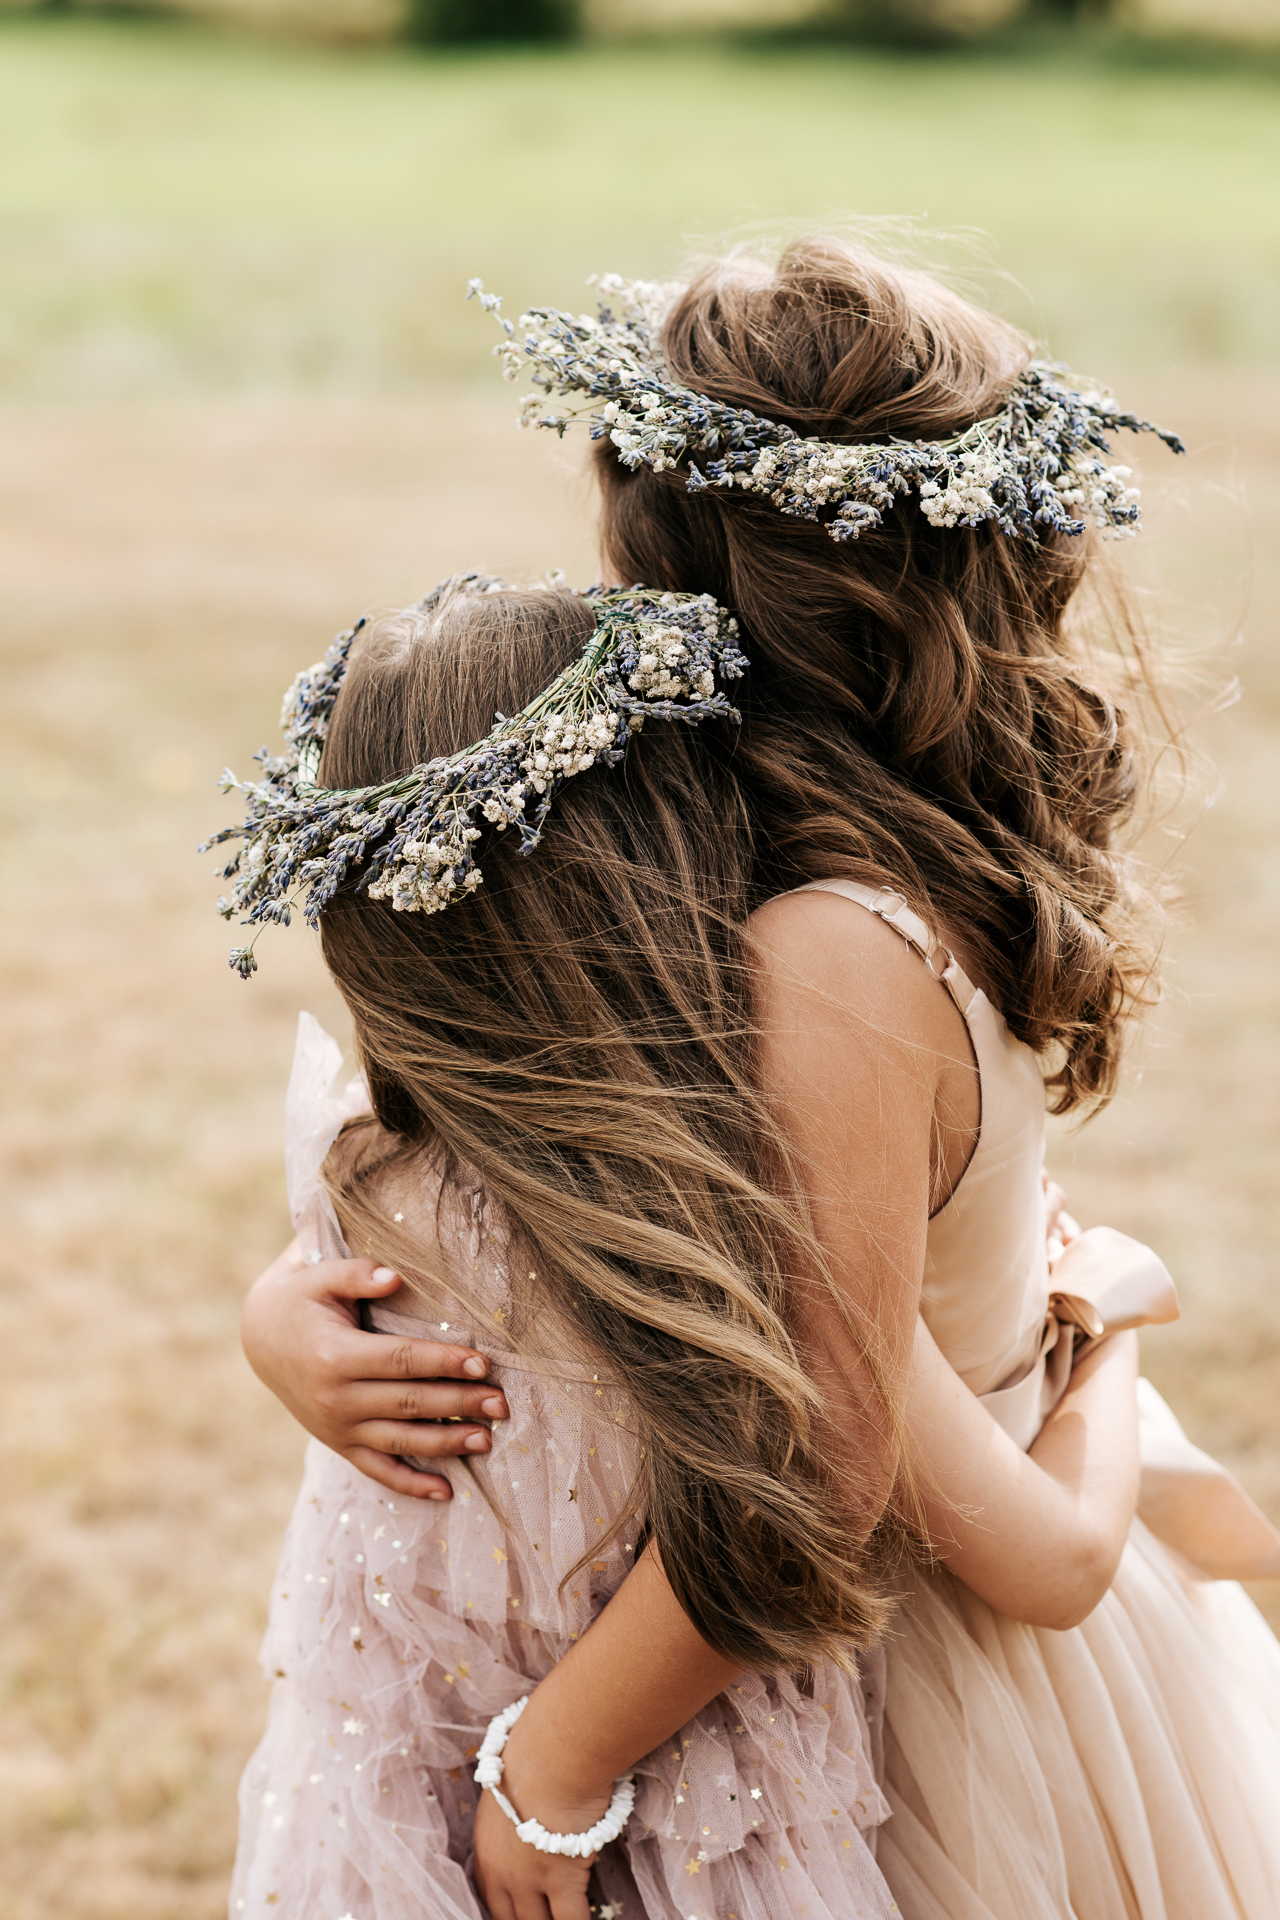 Flower girls wearing lavender hair crowns